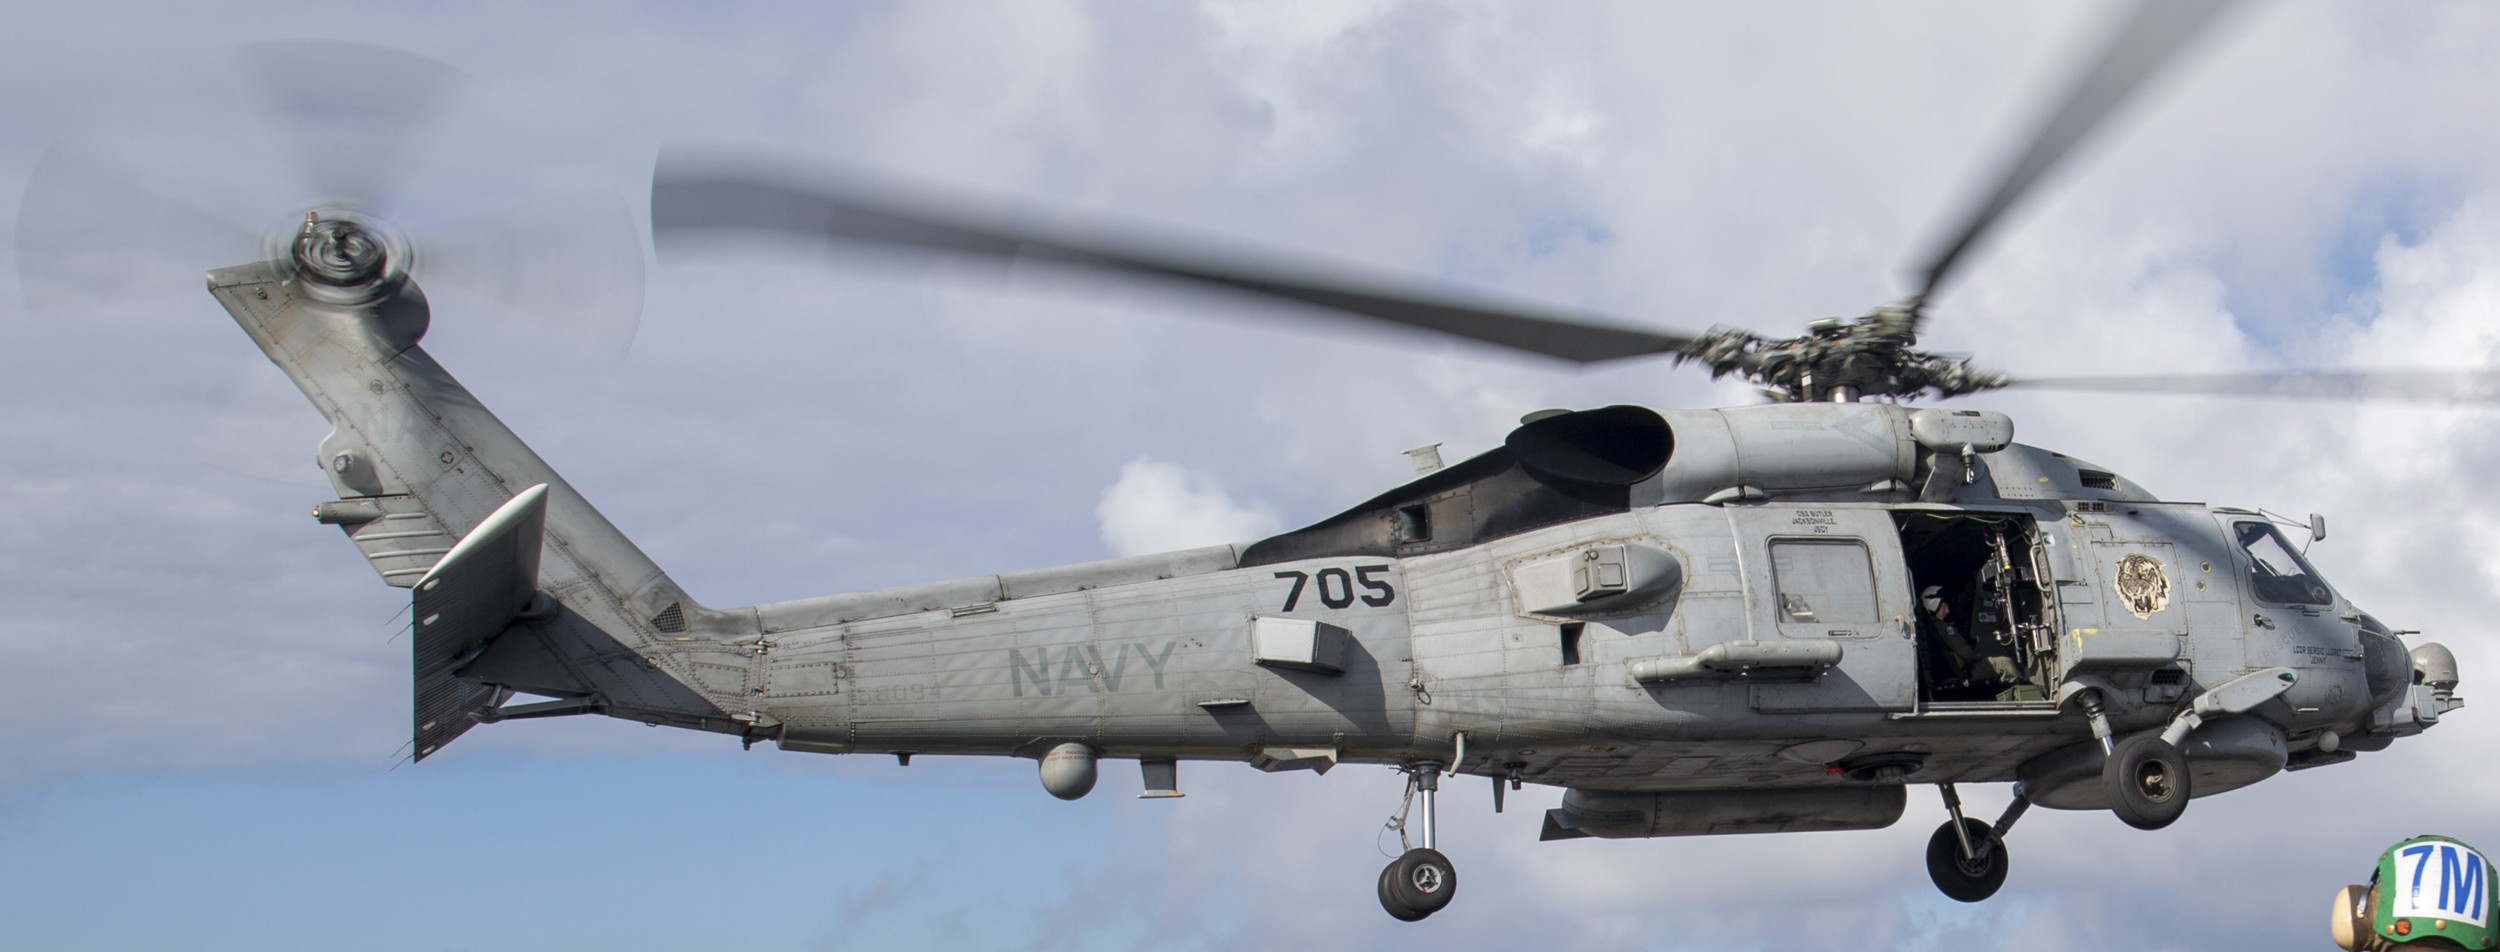 hsm-73 battlecats helicopter maritime strike squadron mh-60r seahawk cvw-17 cvn-68 uss nimitz 110